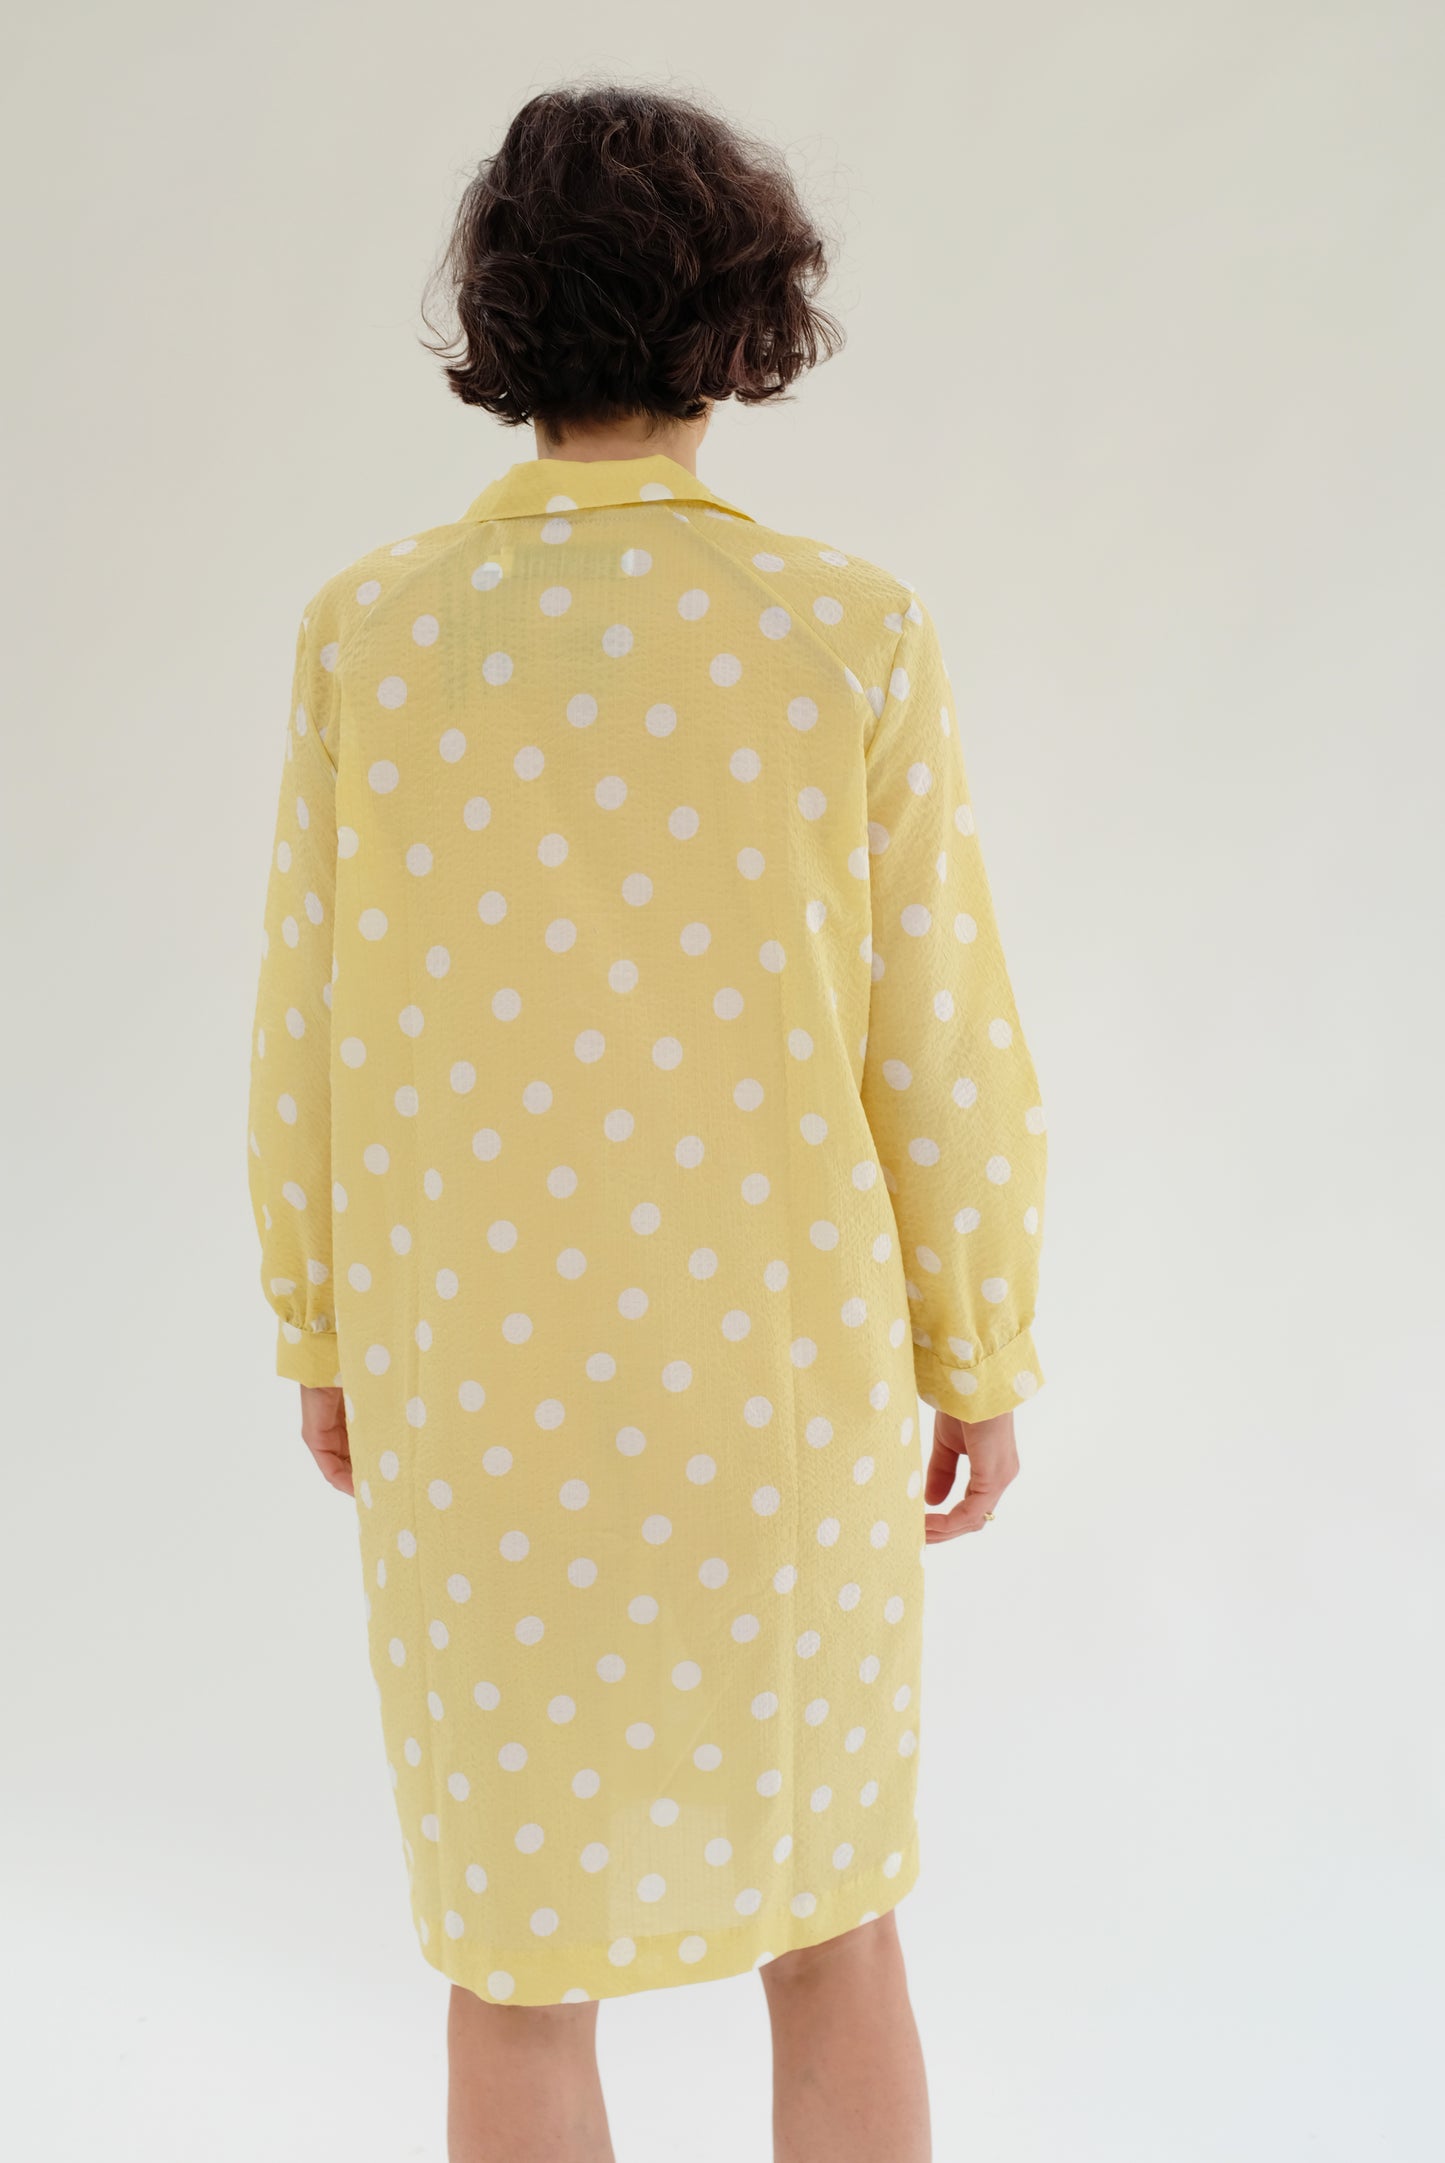 Beklina Deco Dress Yellow Polka Dot